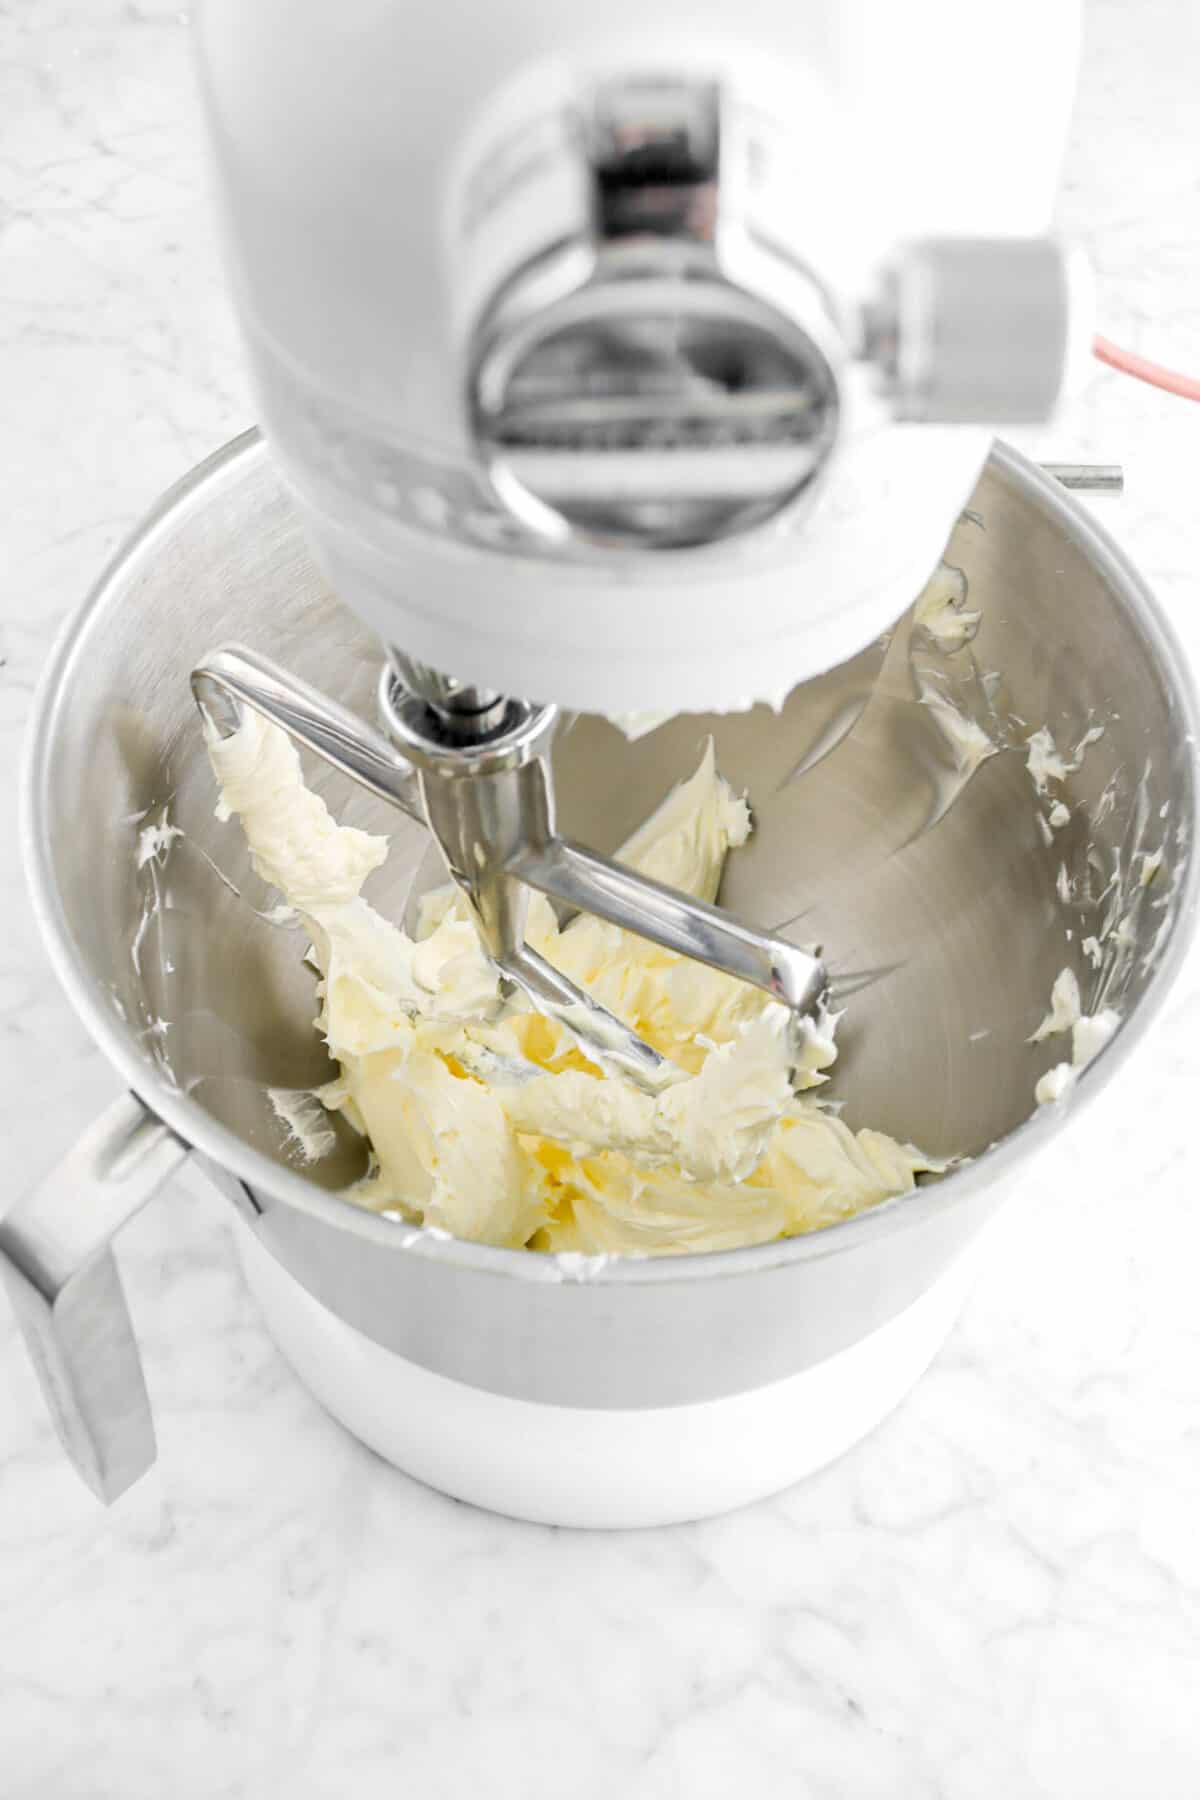 butter beaten until light and fluffy in mixer